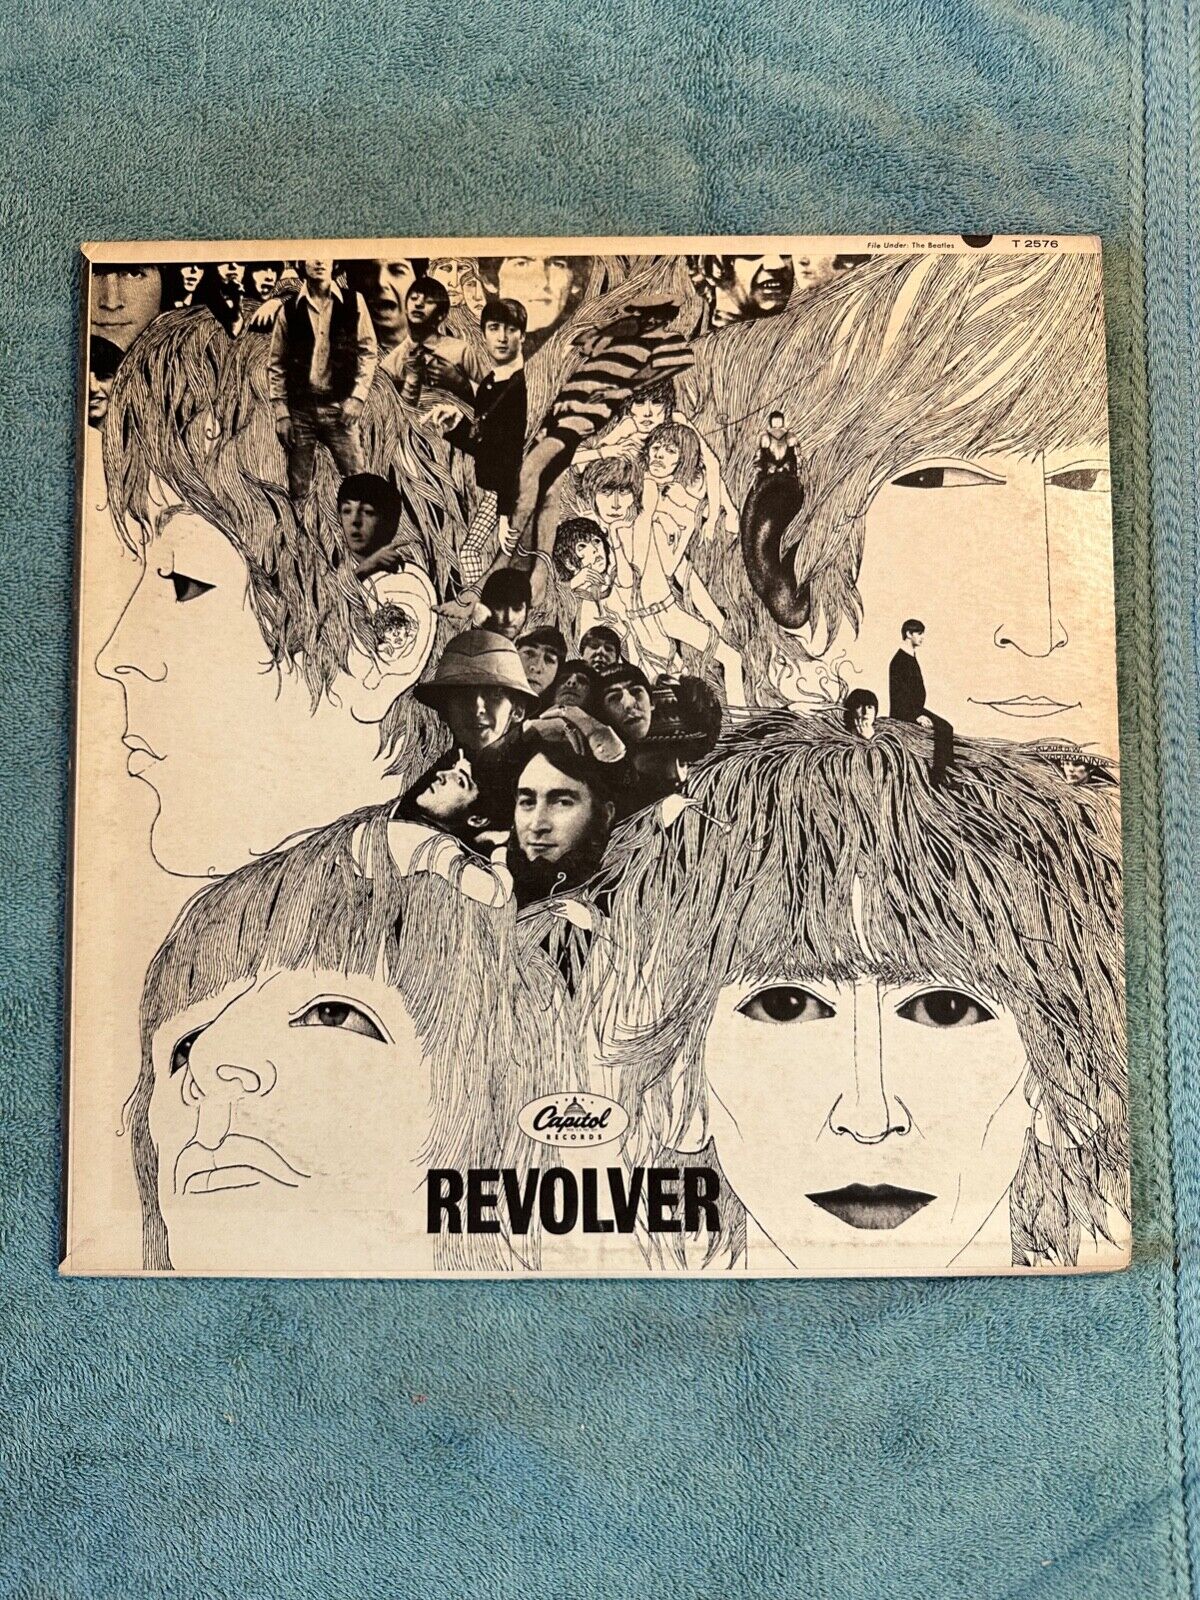 Vintage LP Vinyl Record The Beatles Revolver Capitol Records T-2576